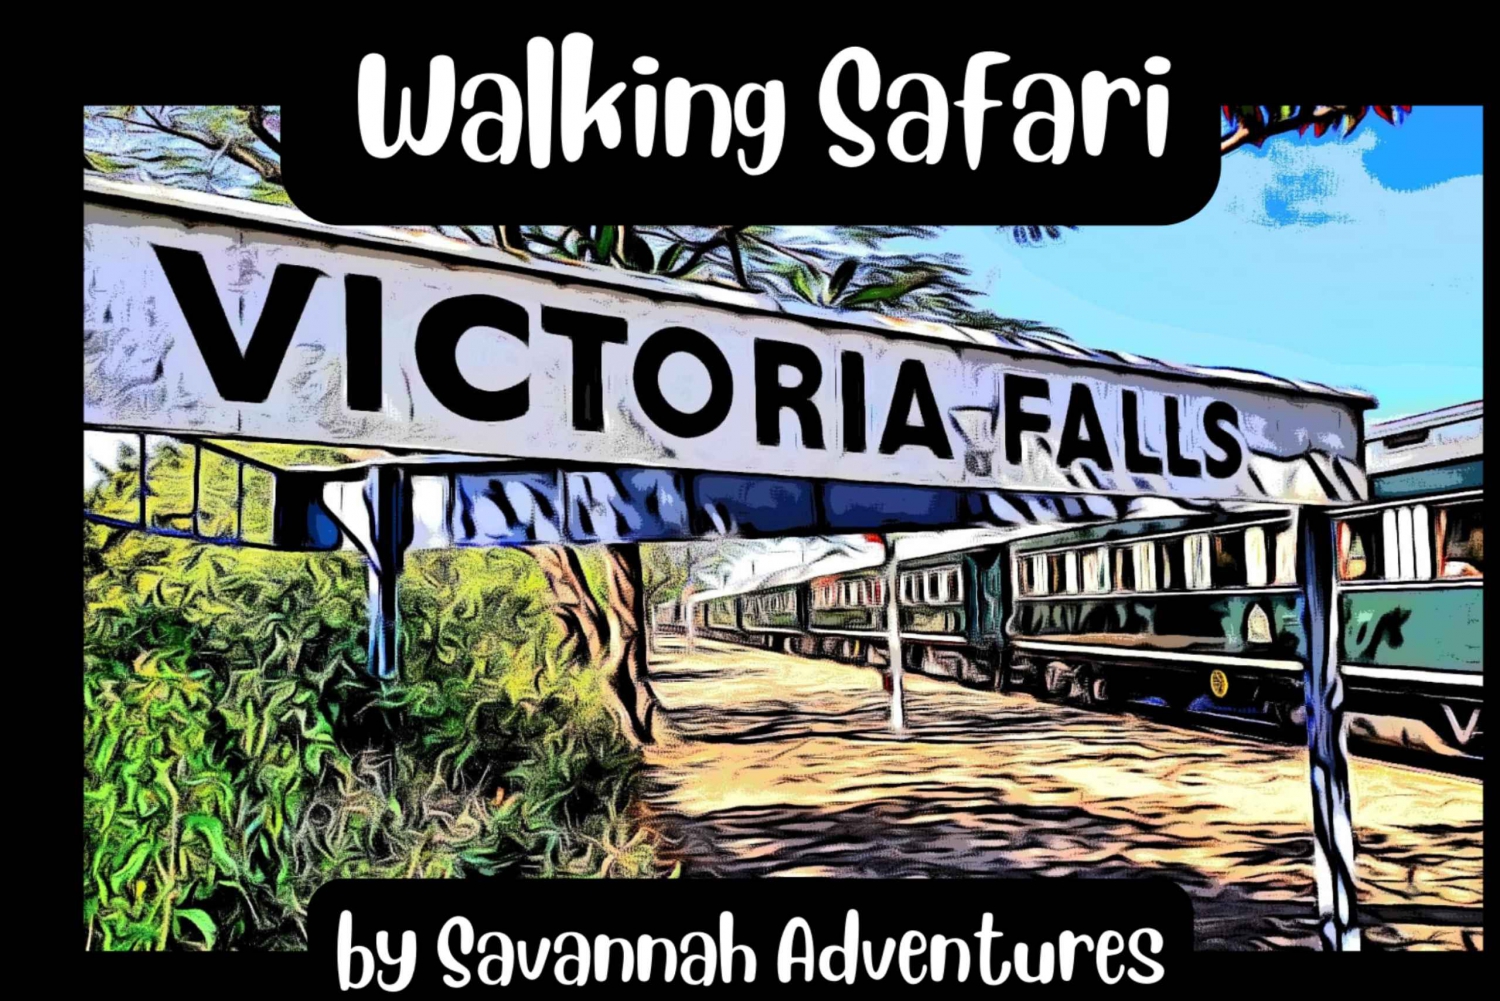 Victoria Falls, Chinotimba Walking Safari